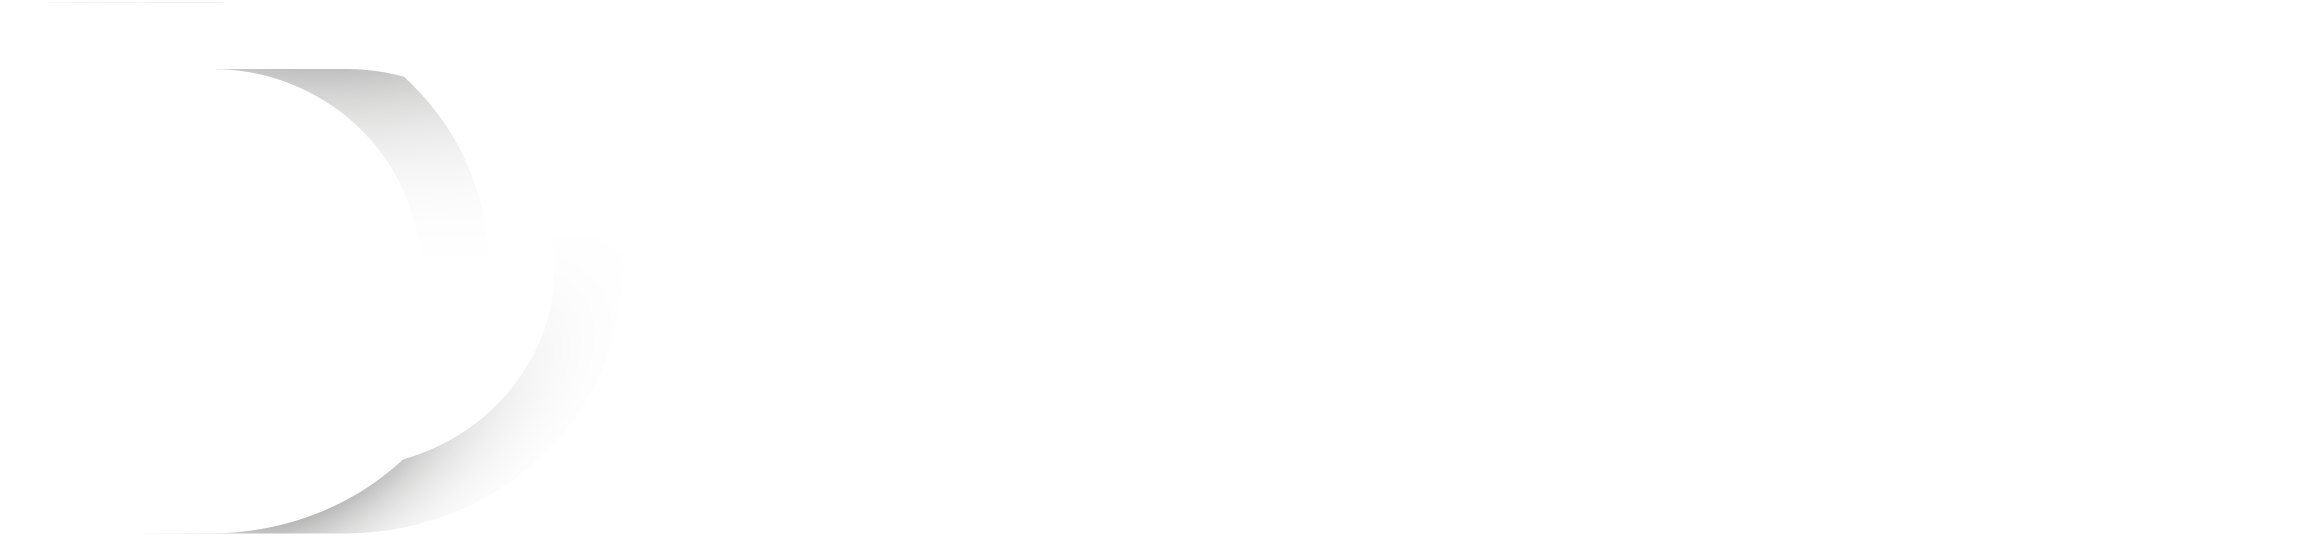 logotipo do dia das empresas maiso nome por extenso